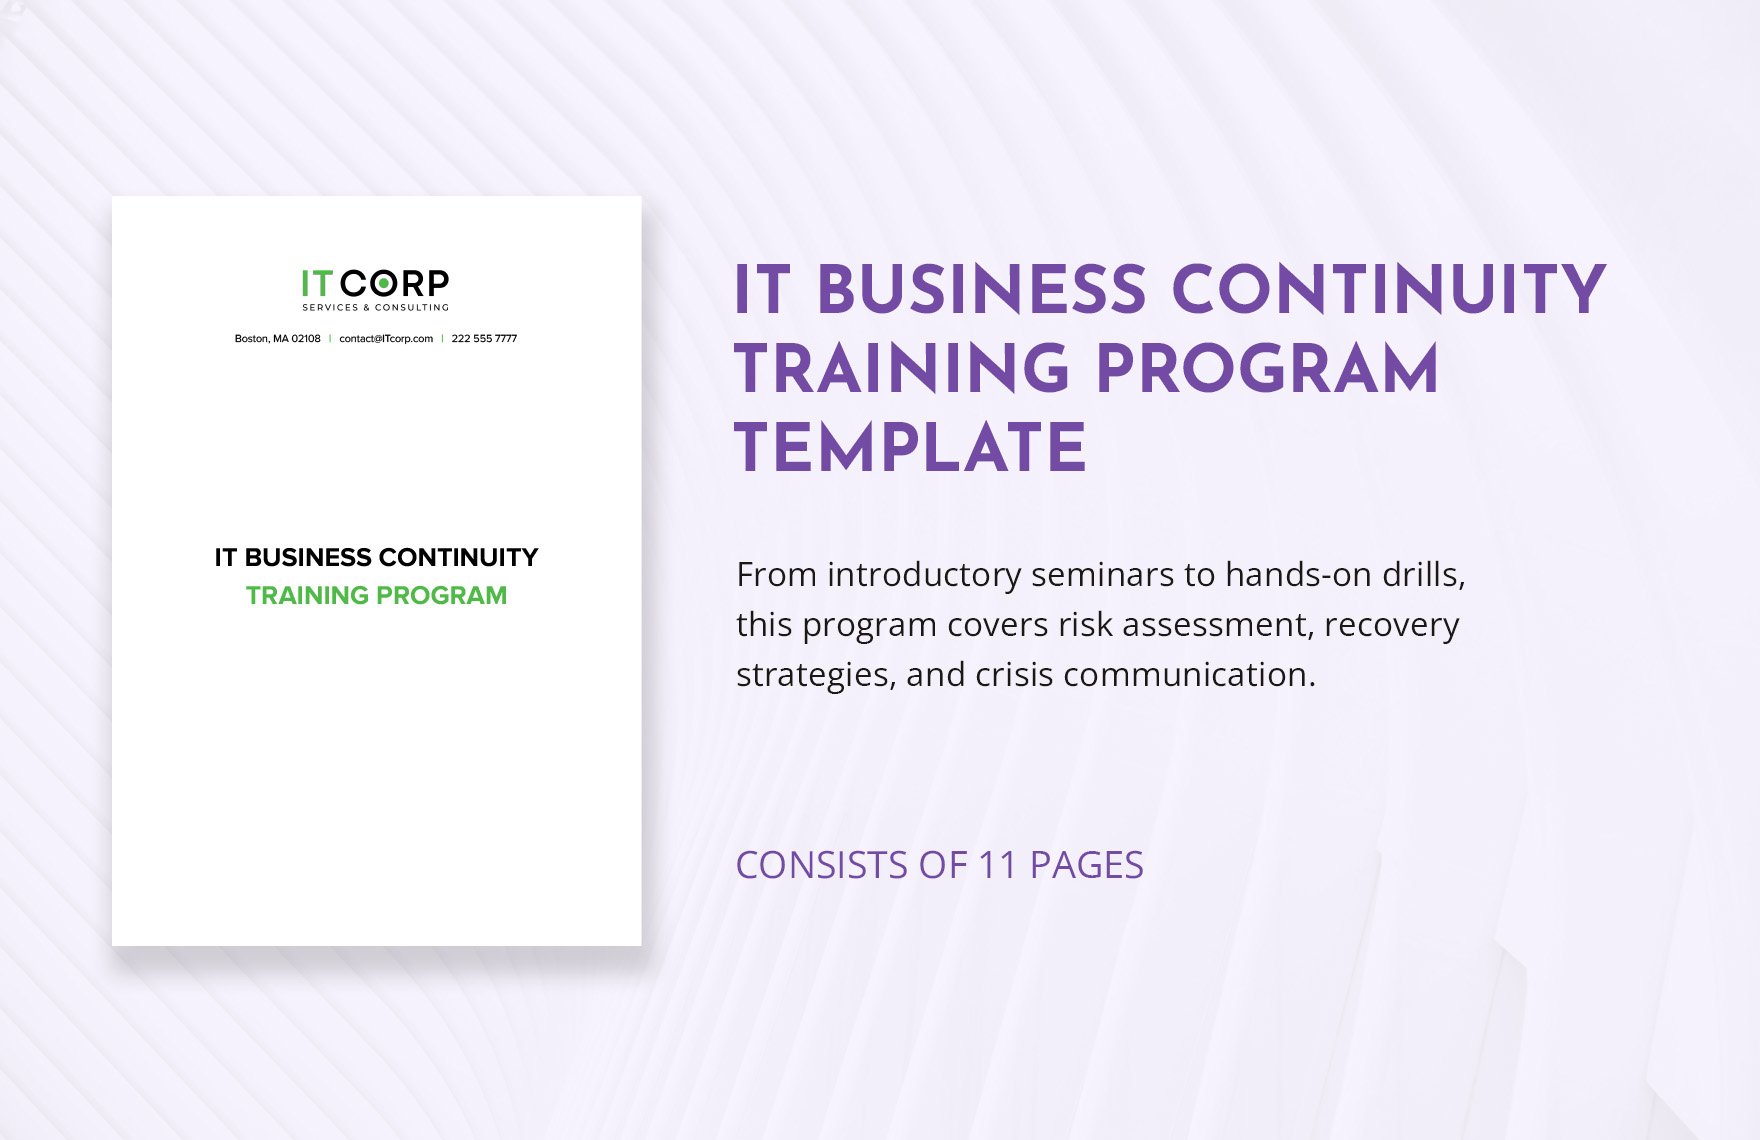 IT Business Continuity Training Program Template